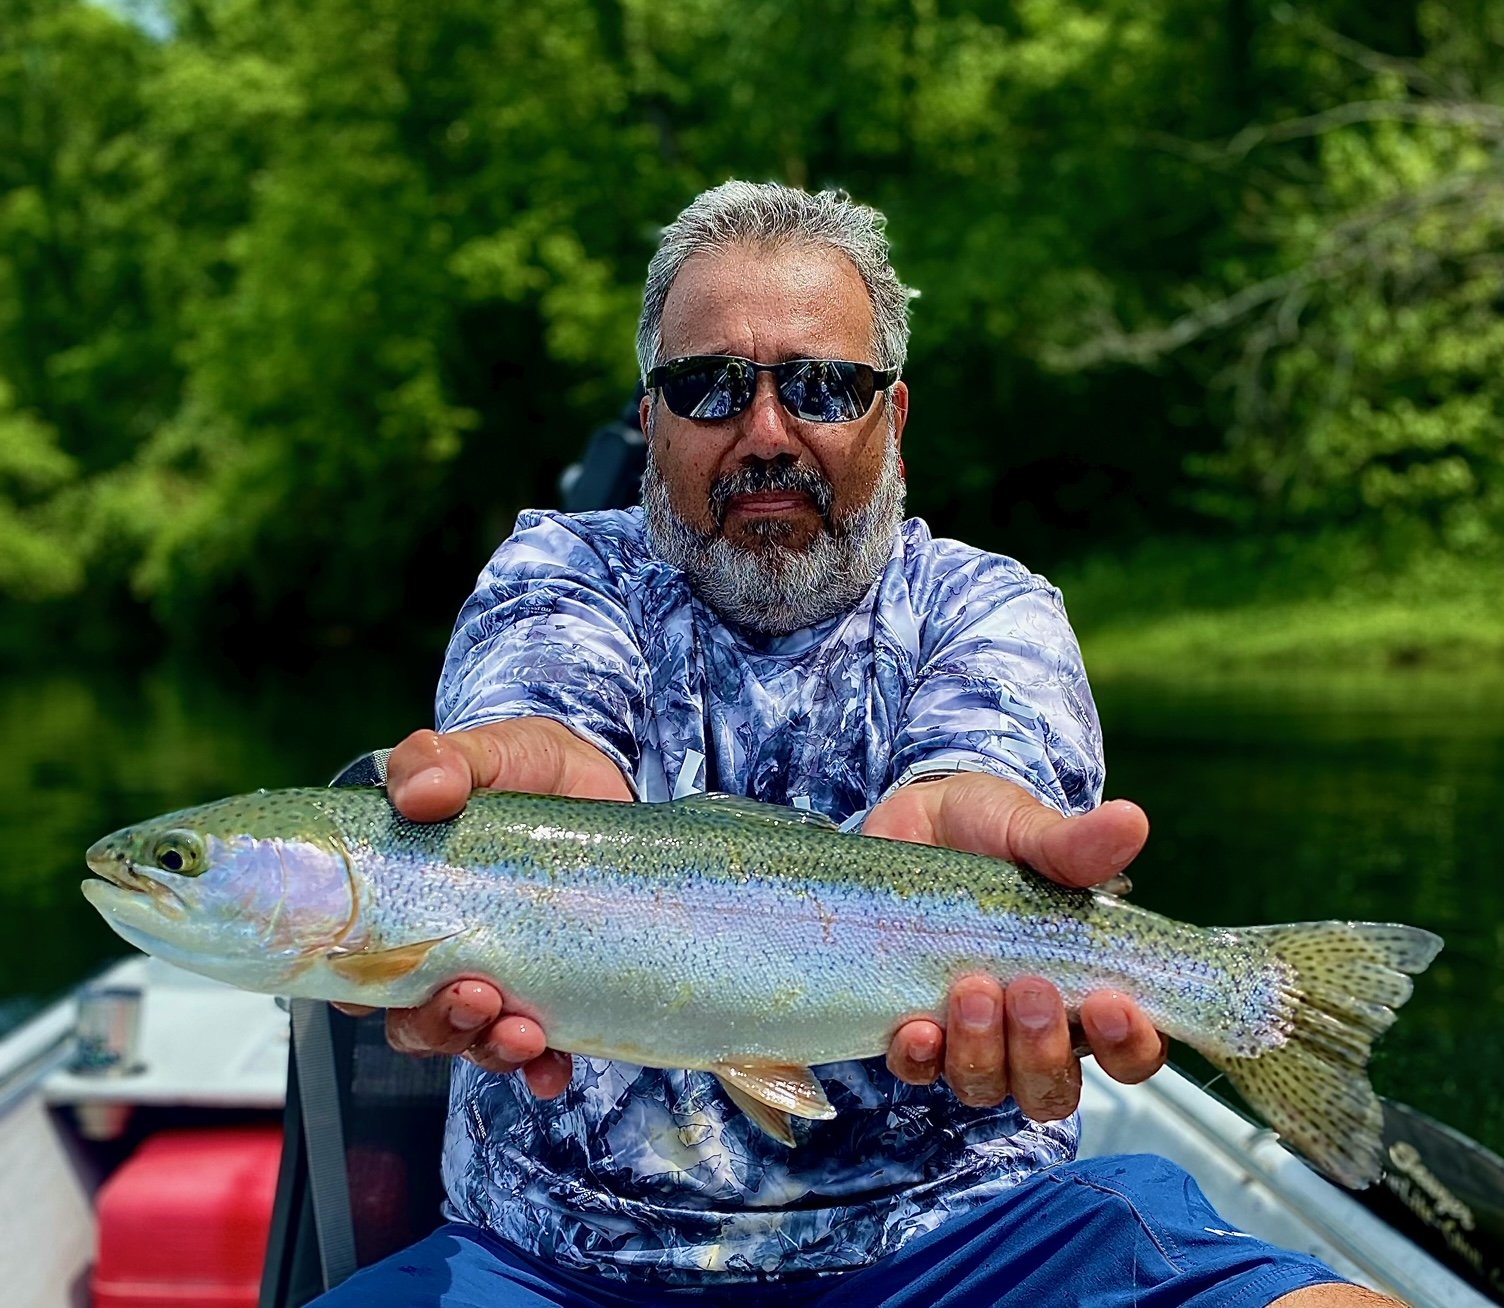 Fishing the White River in Arkansas